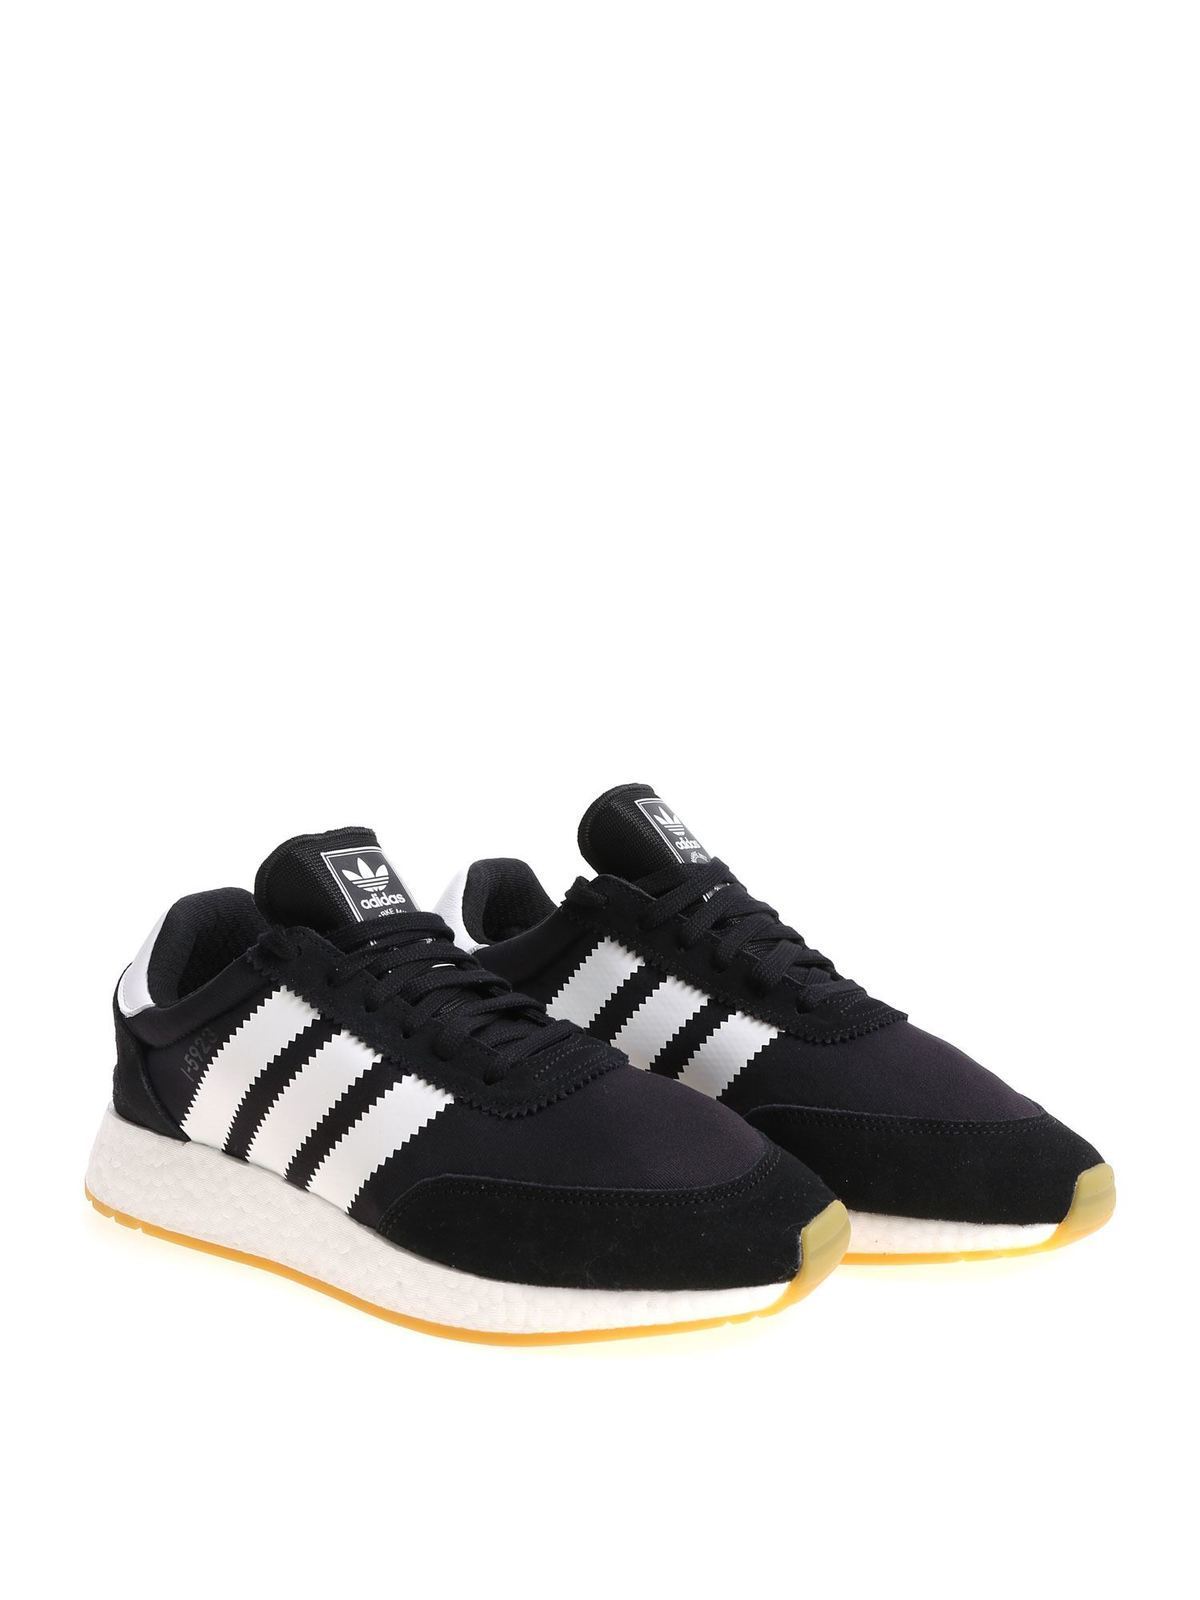 mister temperamentet Paradoks Fugtig Trainers Adidas Originals - I-5923 W sneakers in black - D97344